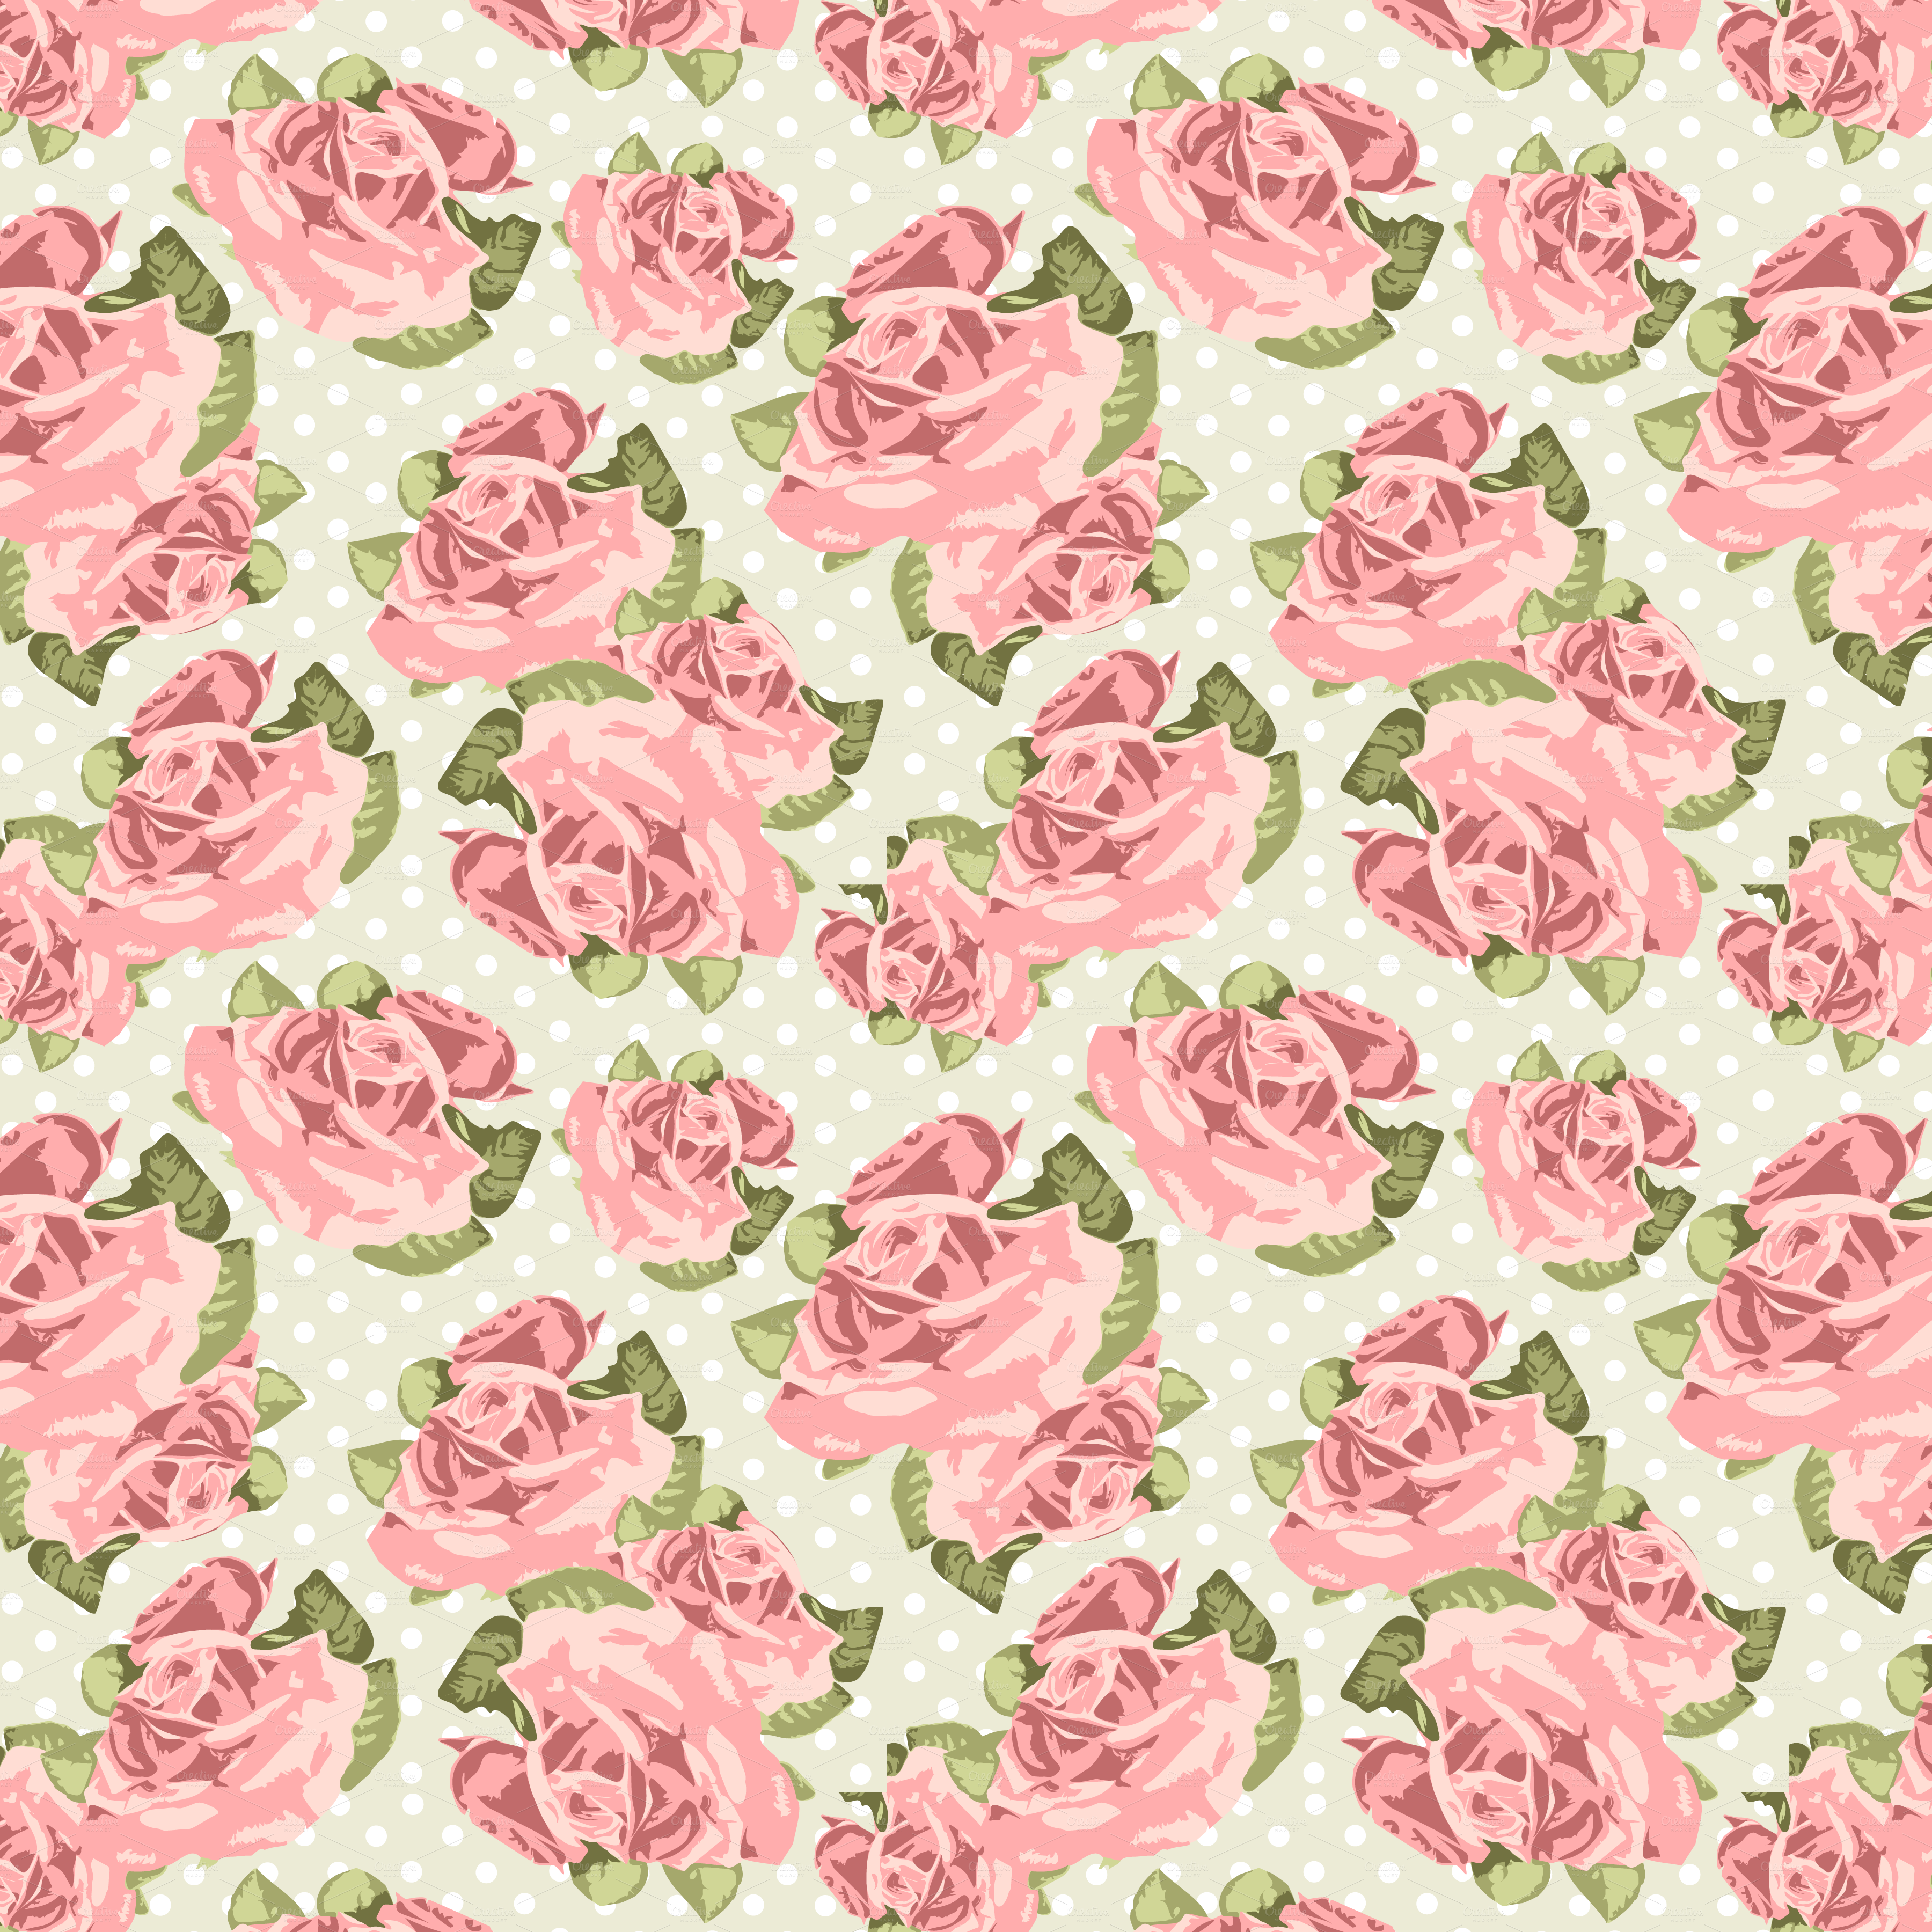 Floral print wallpaper tumblr